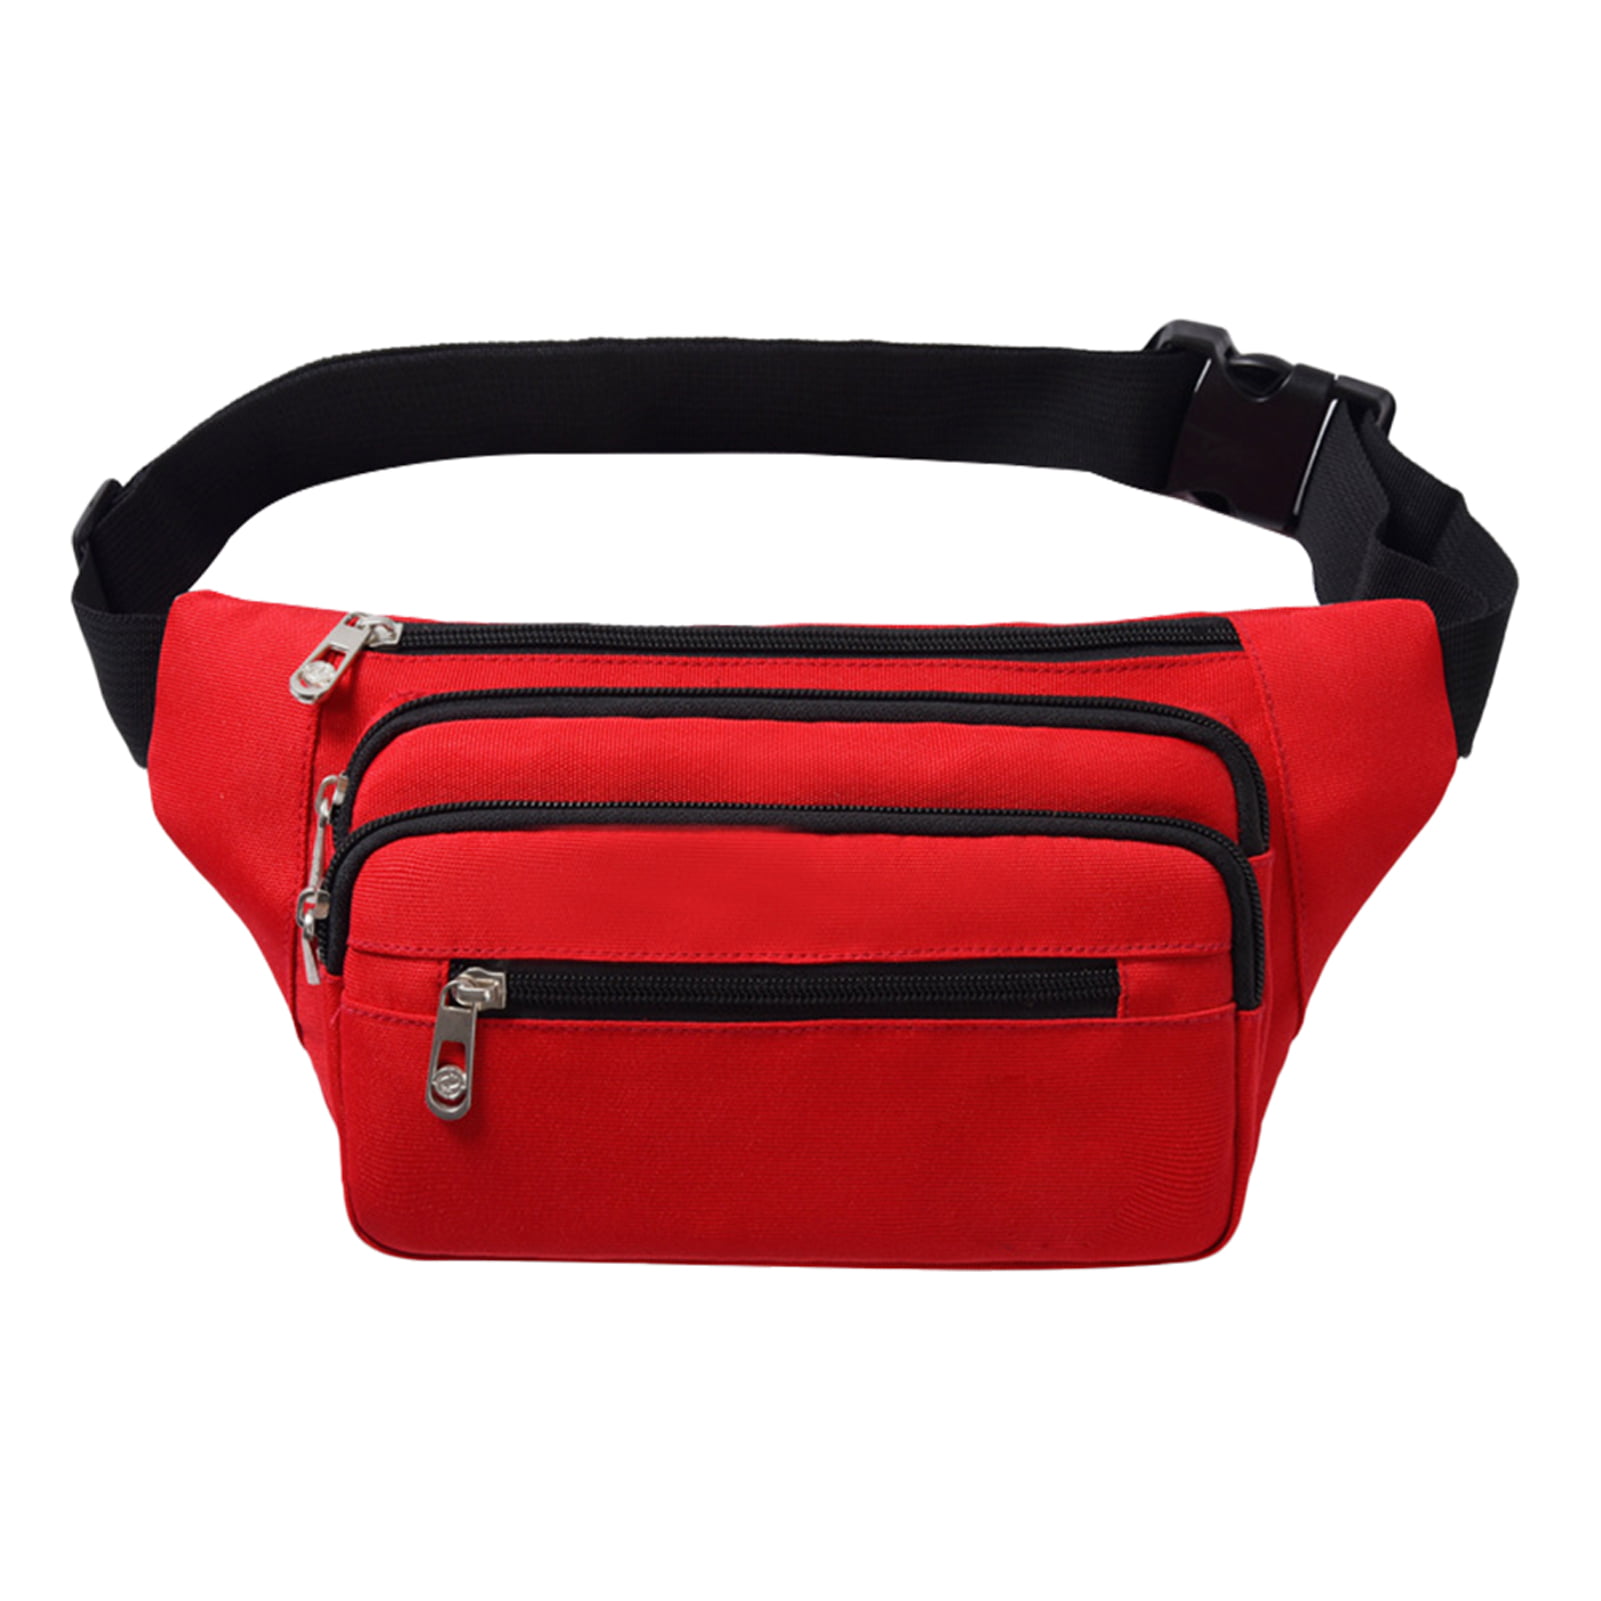 PU Fanny Pack For Men Women Waist Bag Adjustable Belt LARGE Capacity Pouch